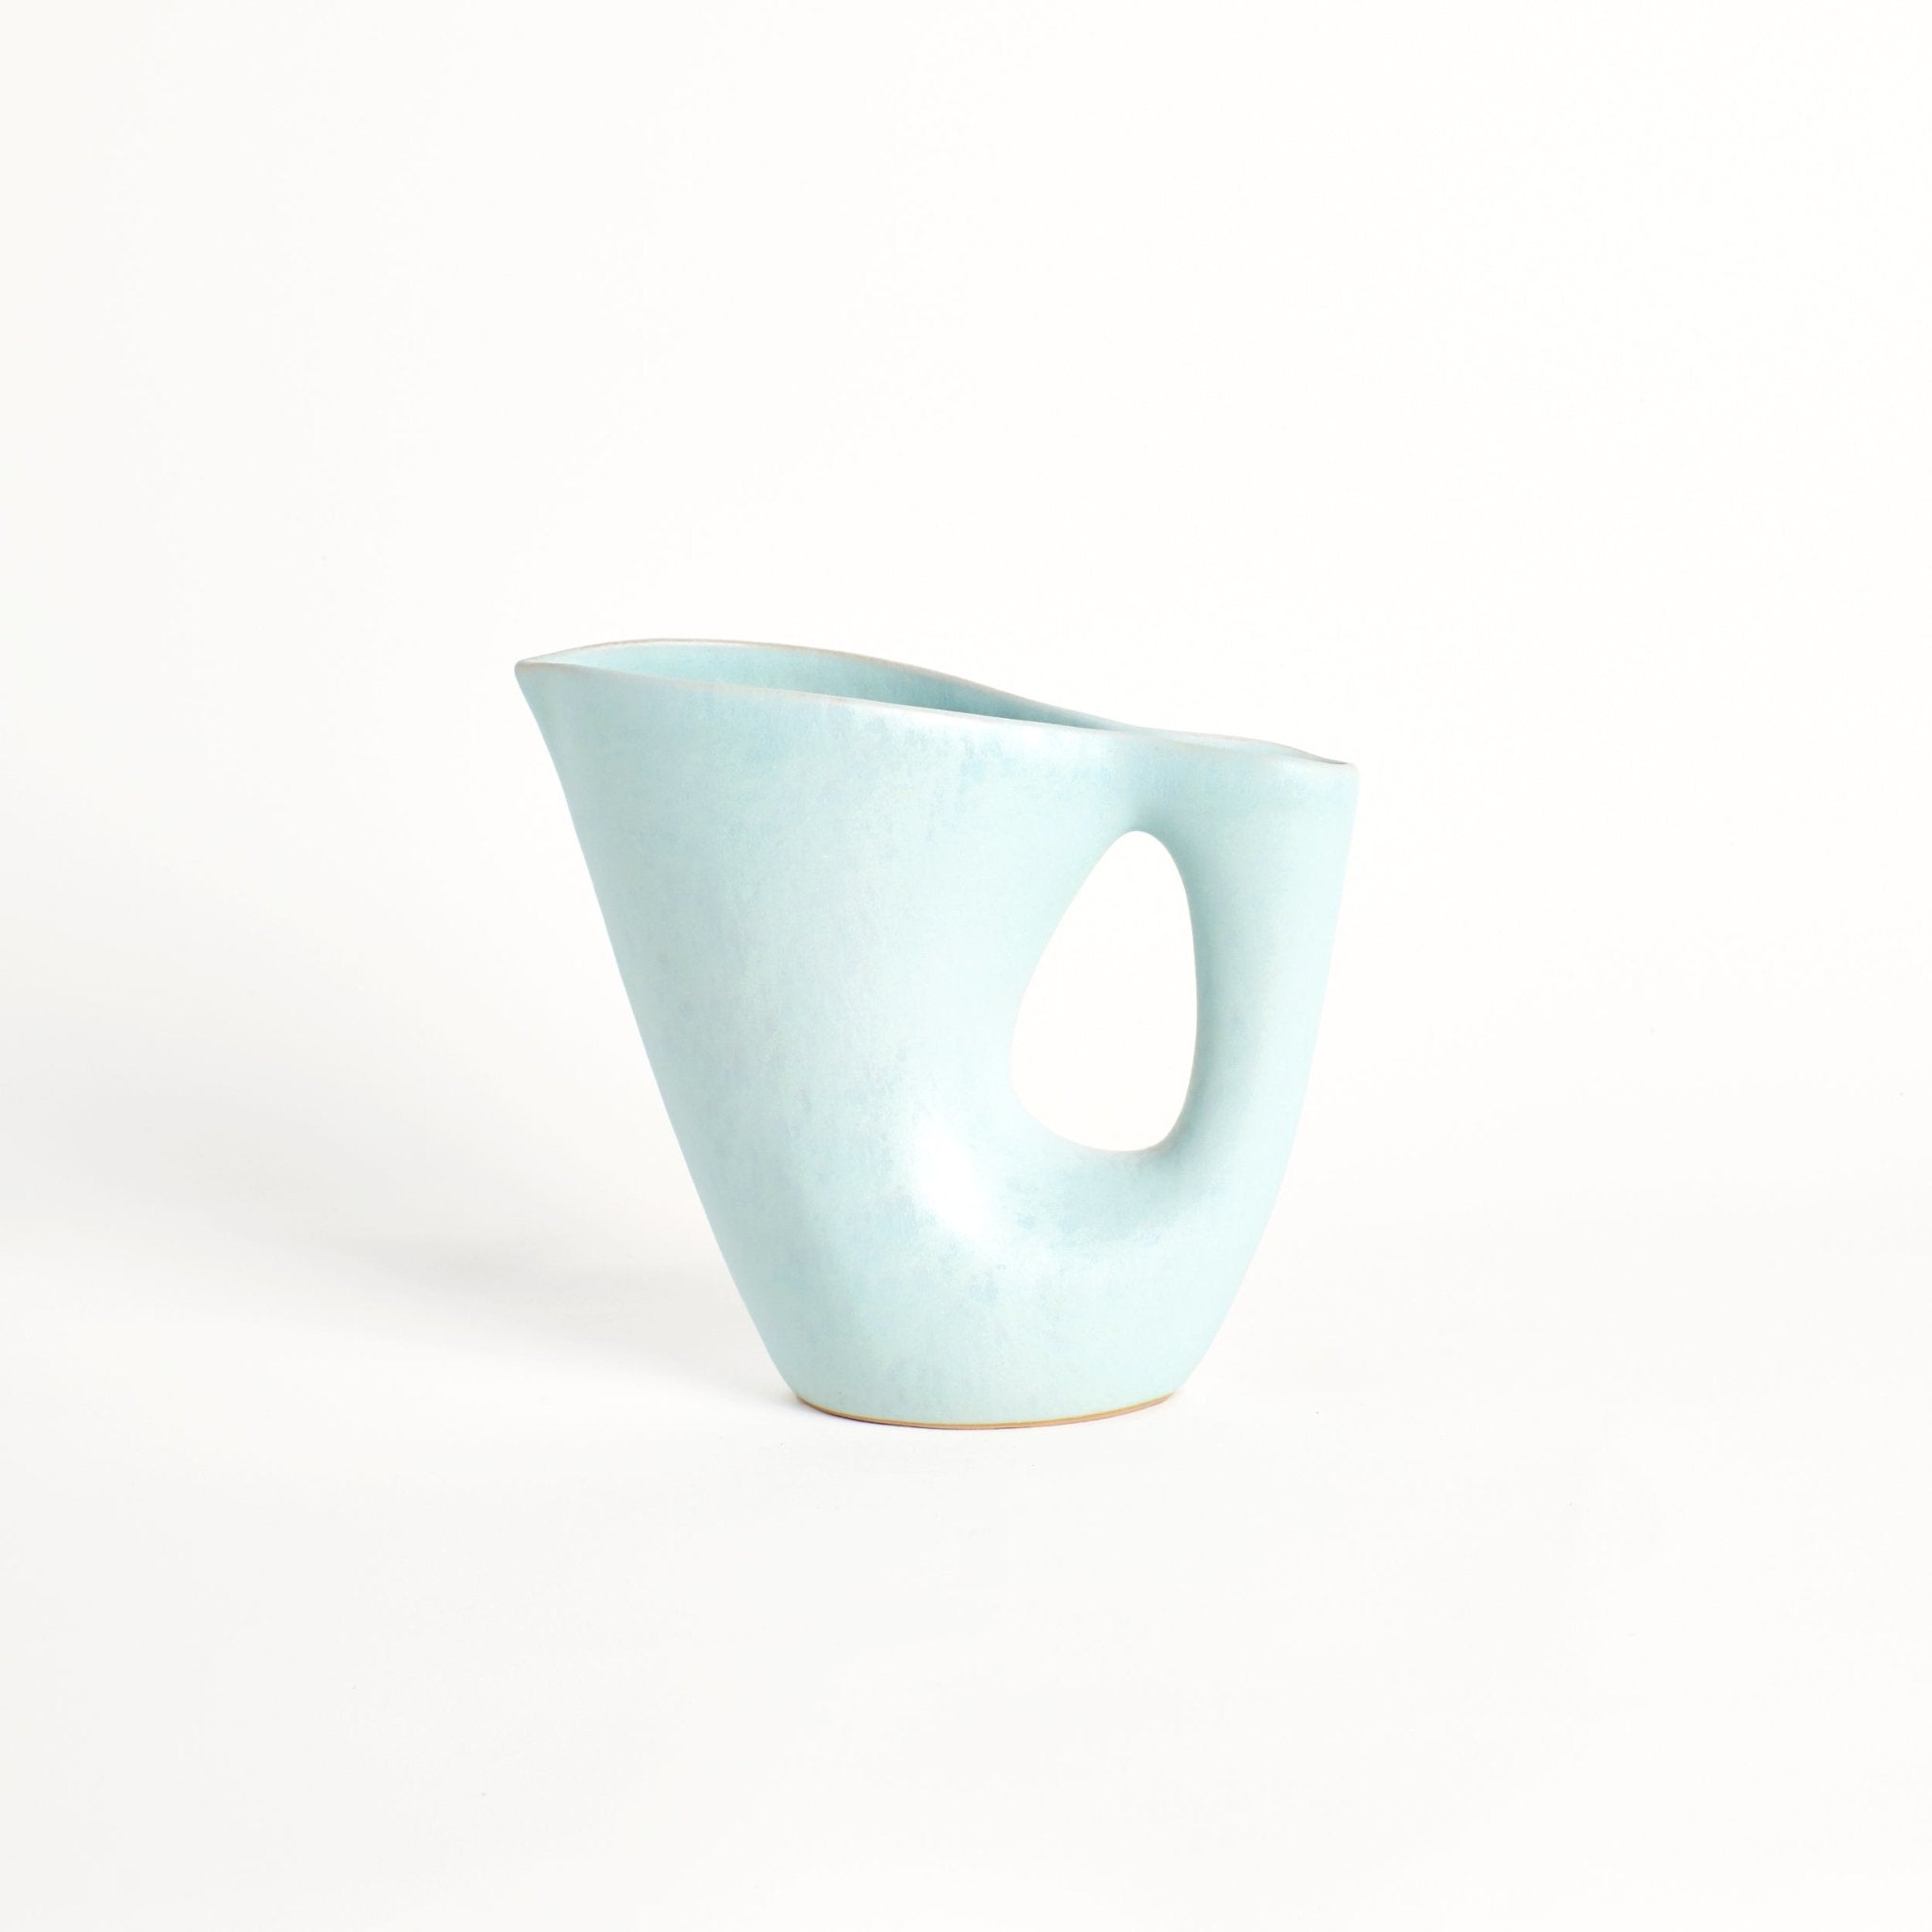 Mamasita Jug - Hellblau Vase von Project 213A